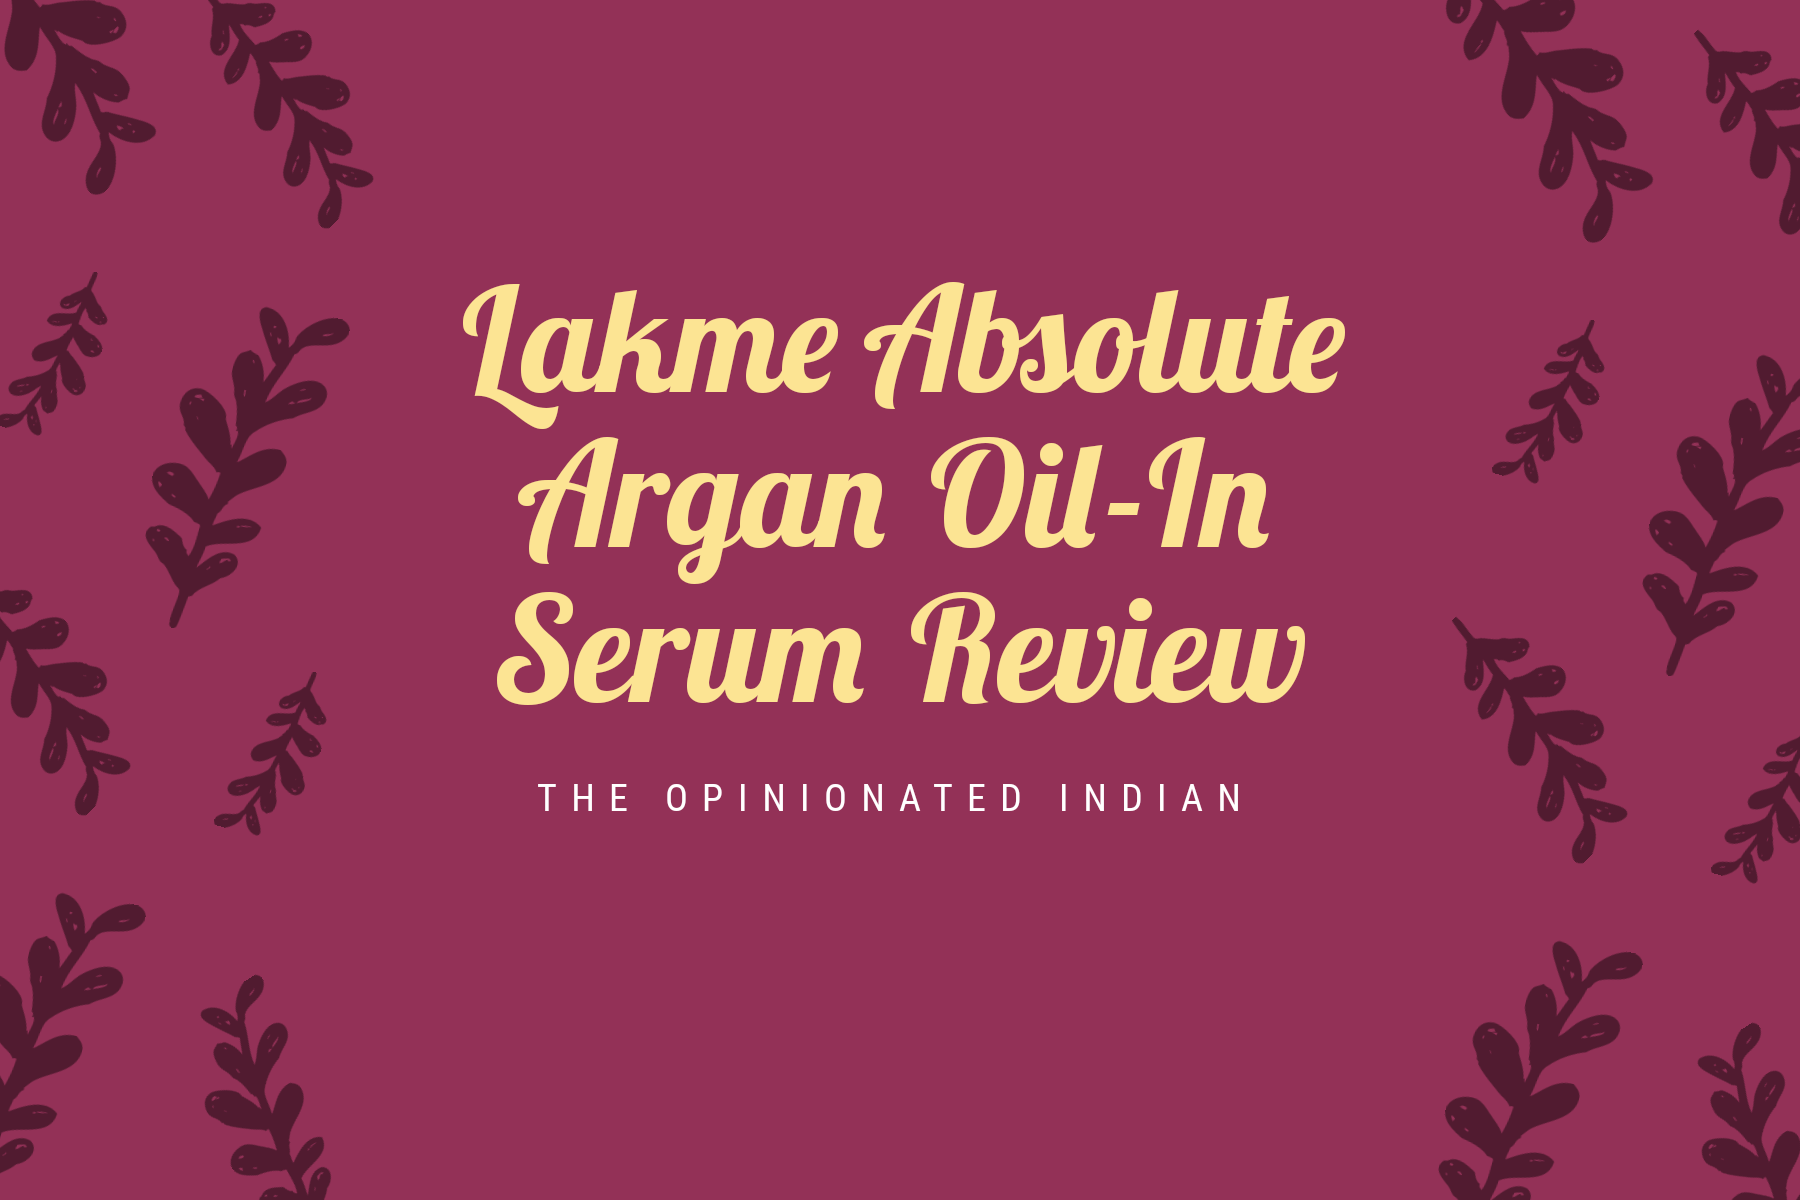 Lakme Absolute Argan Oil-In Serum Review